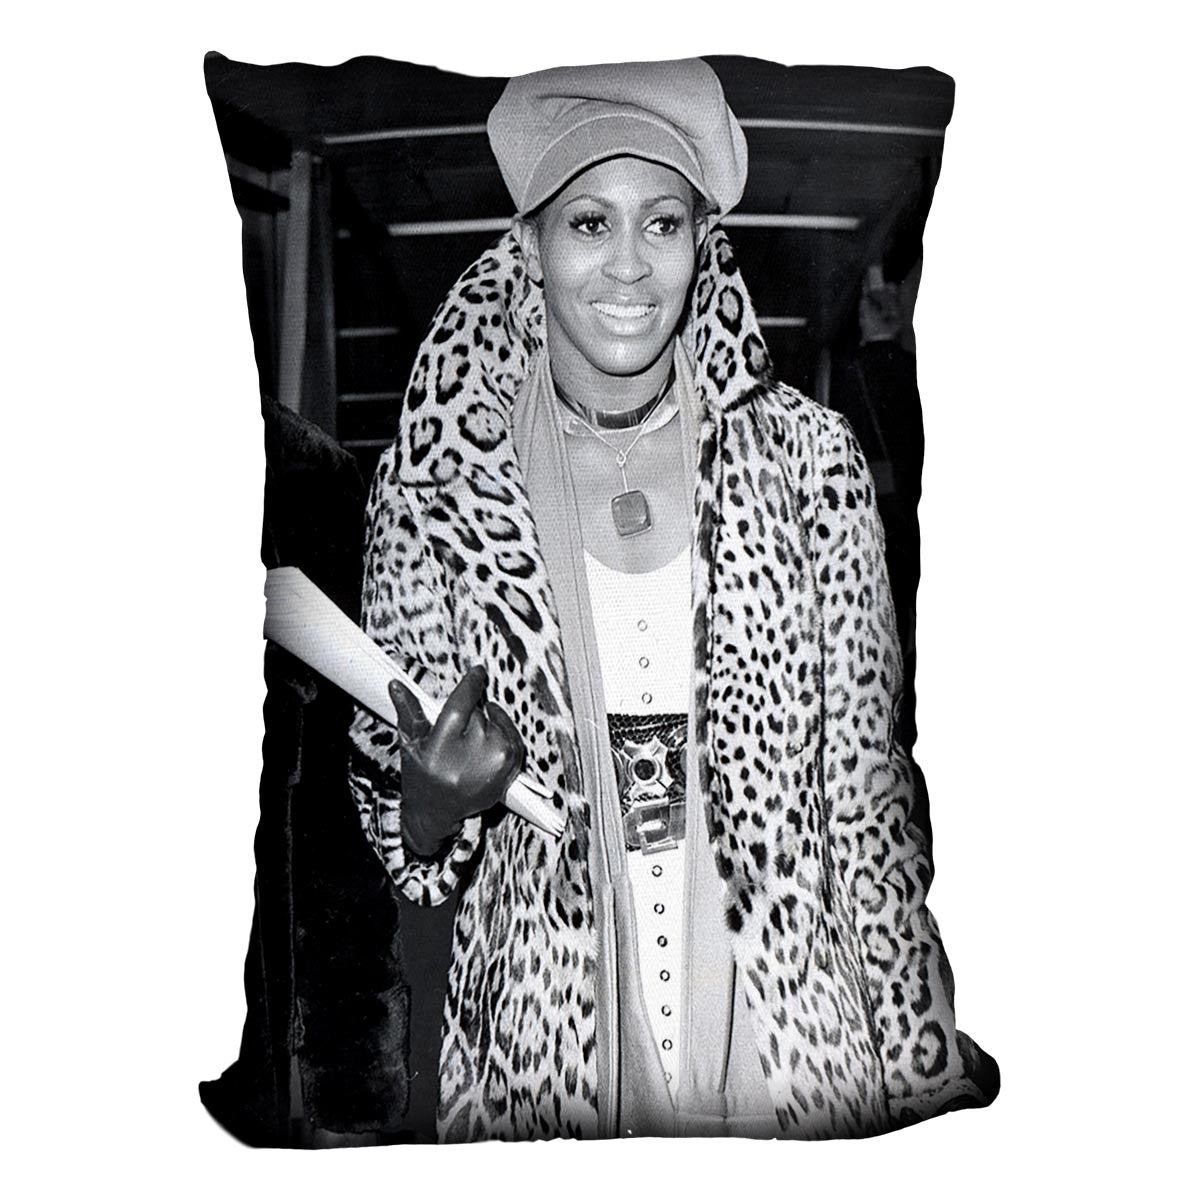 Tina Turner in leopard Cushion